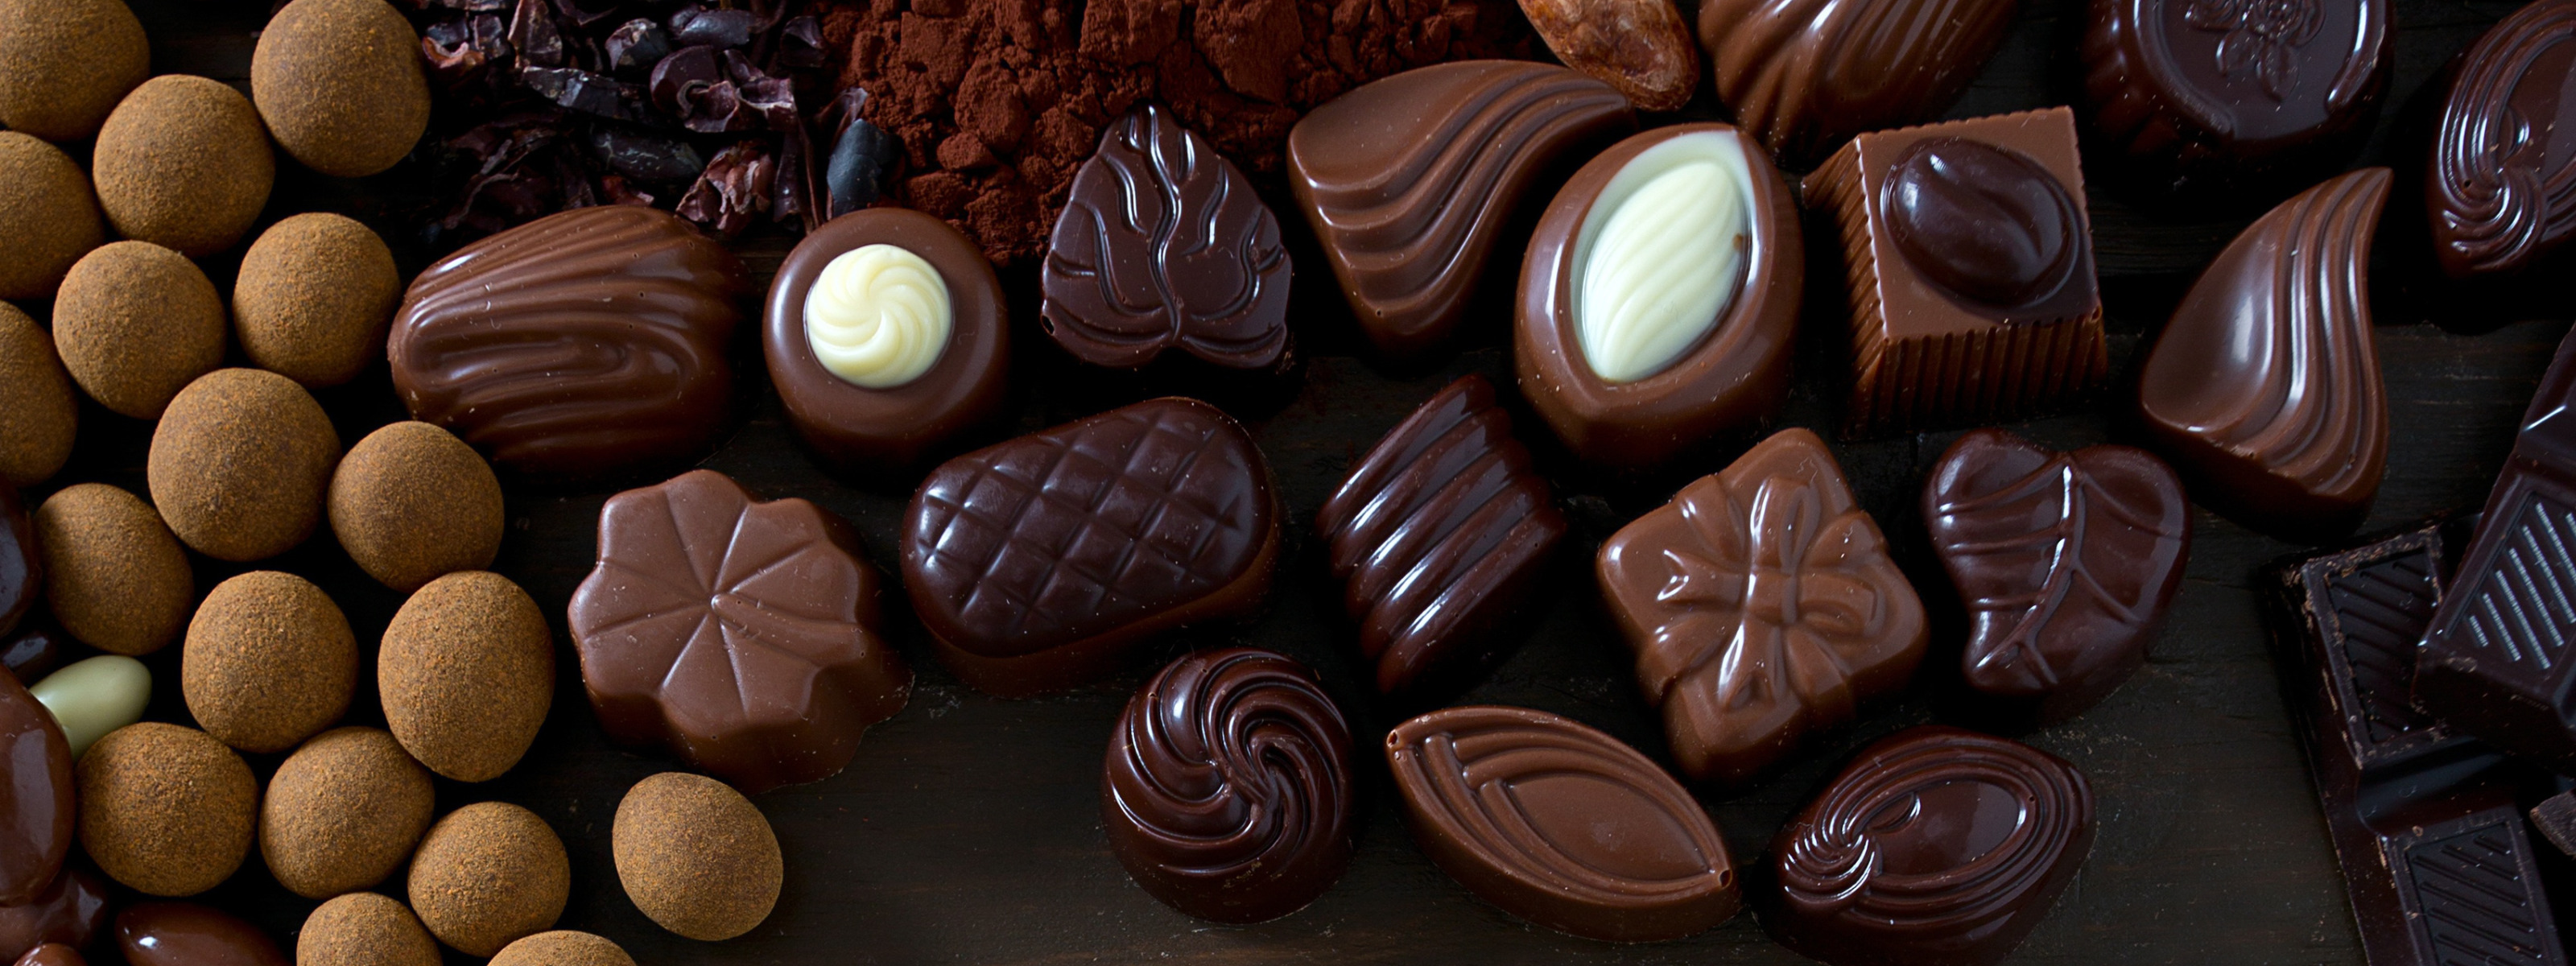 Конфетис. Шоколад. Шоколад обои. Виды шоколадных конфет. Шоколадные конфеты с орехами.